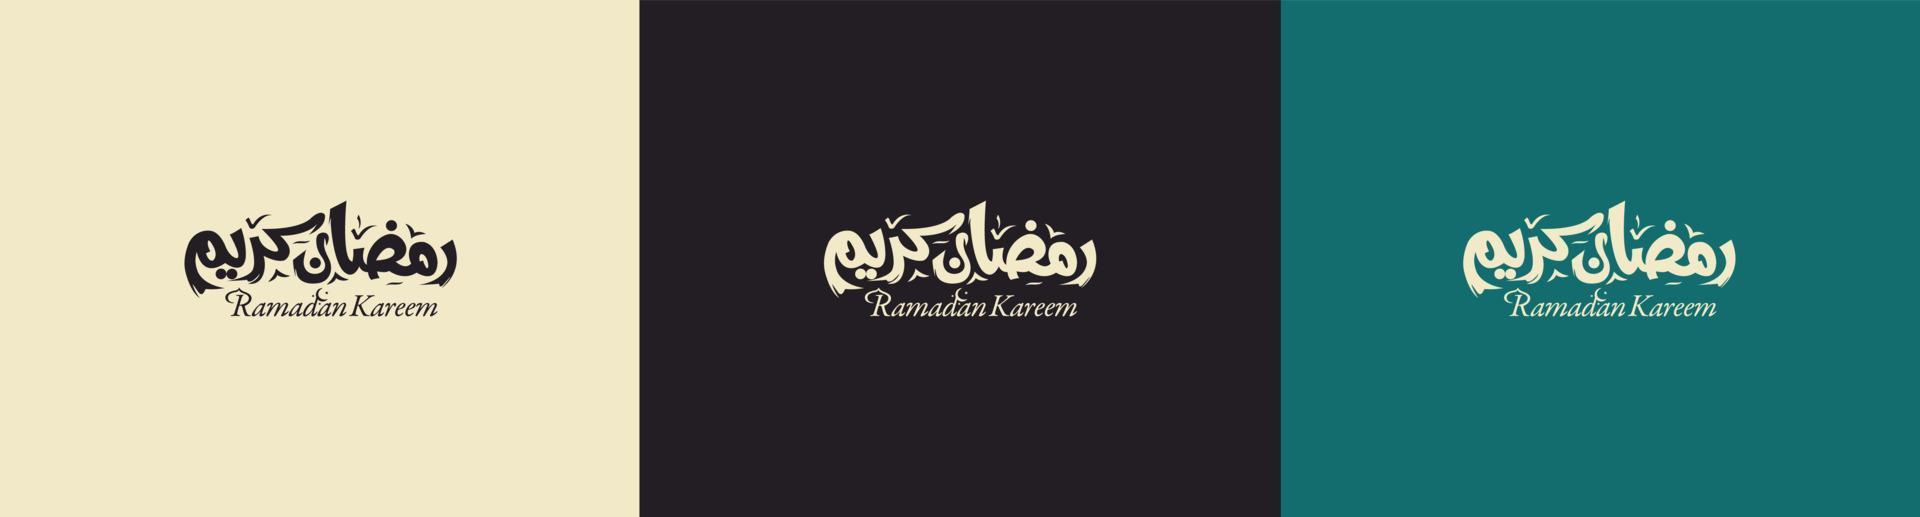 Kareem Ramadan. Ramadan Mubarak. tradotto felice, santo ramadan. mese di digiuno per i musulmani. tipografia araba. vettore